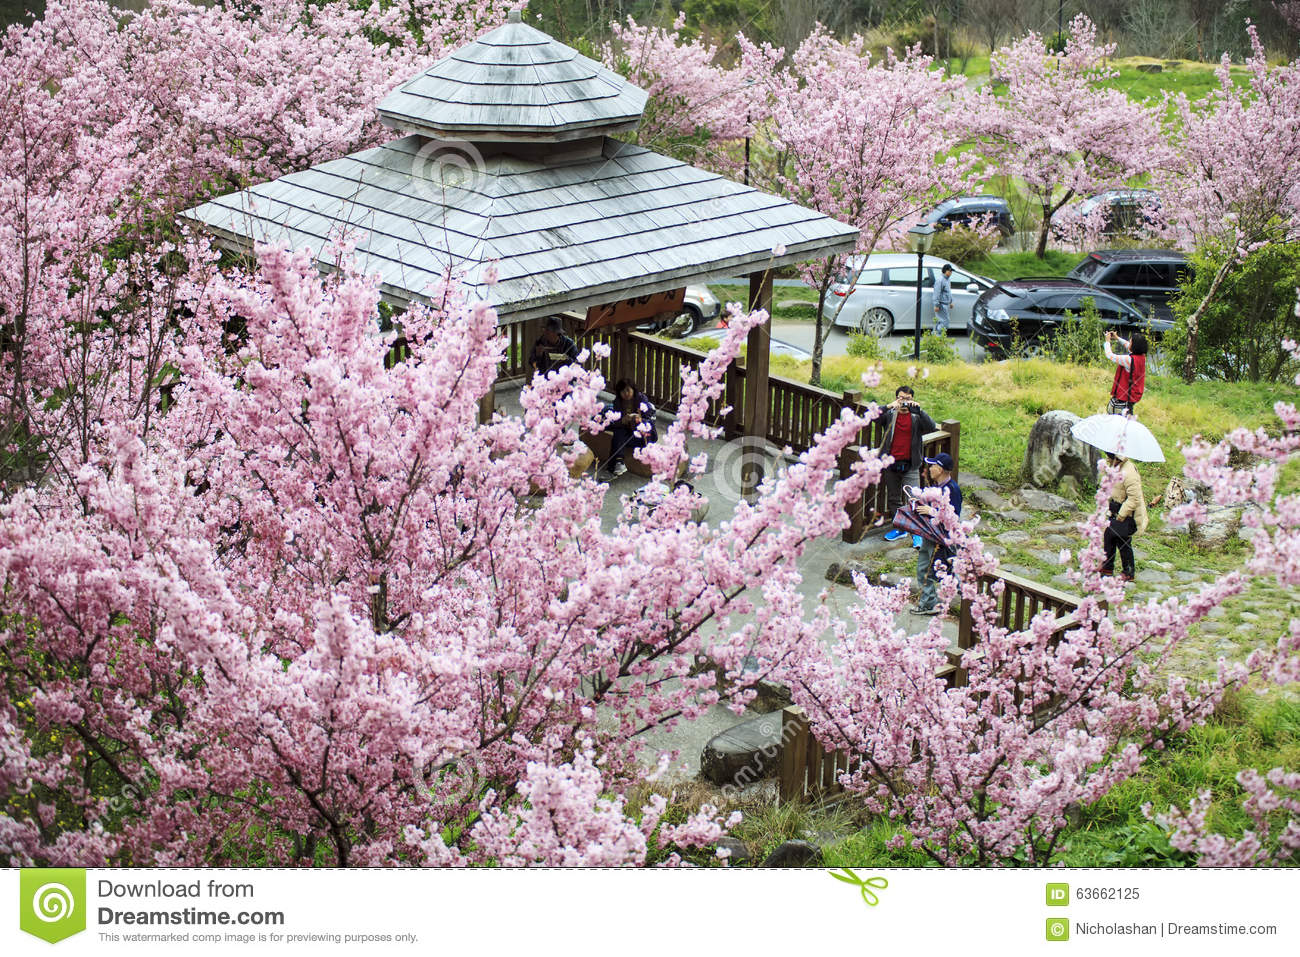 wuling-farm-cherry-blossom-season-nantou-taiwan-february-63662125.jpg